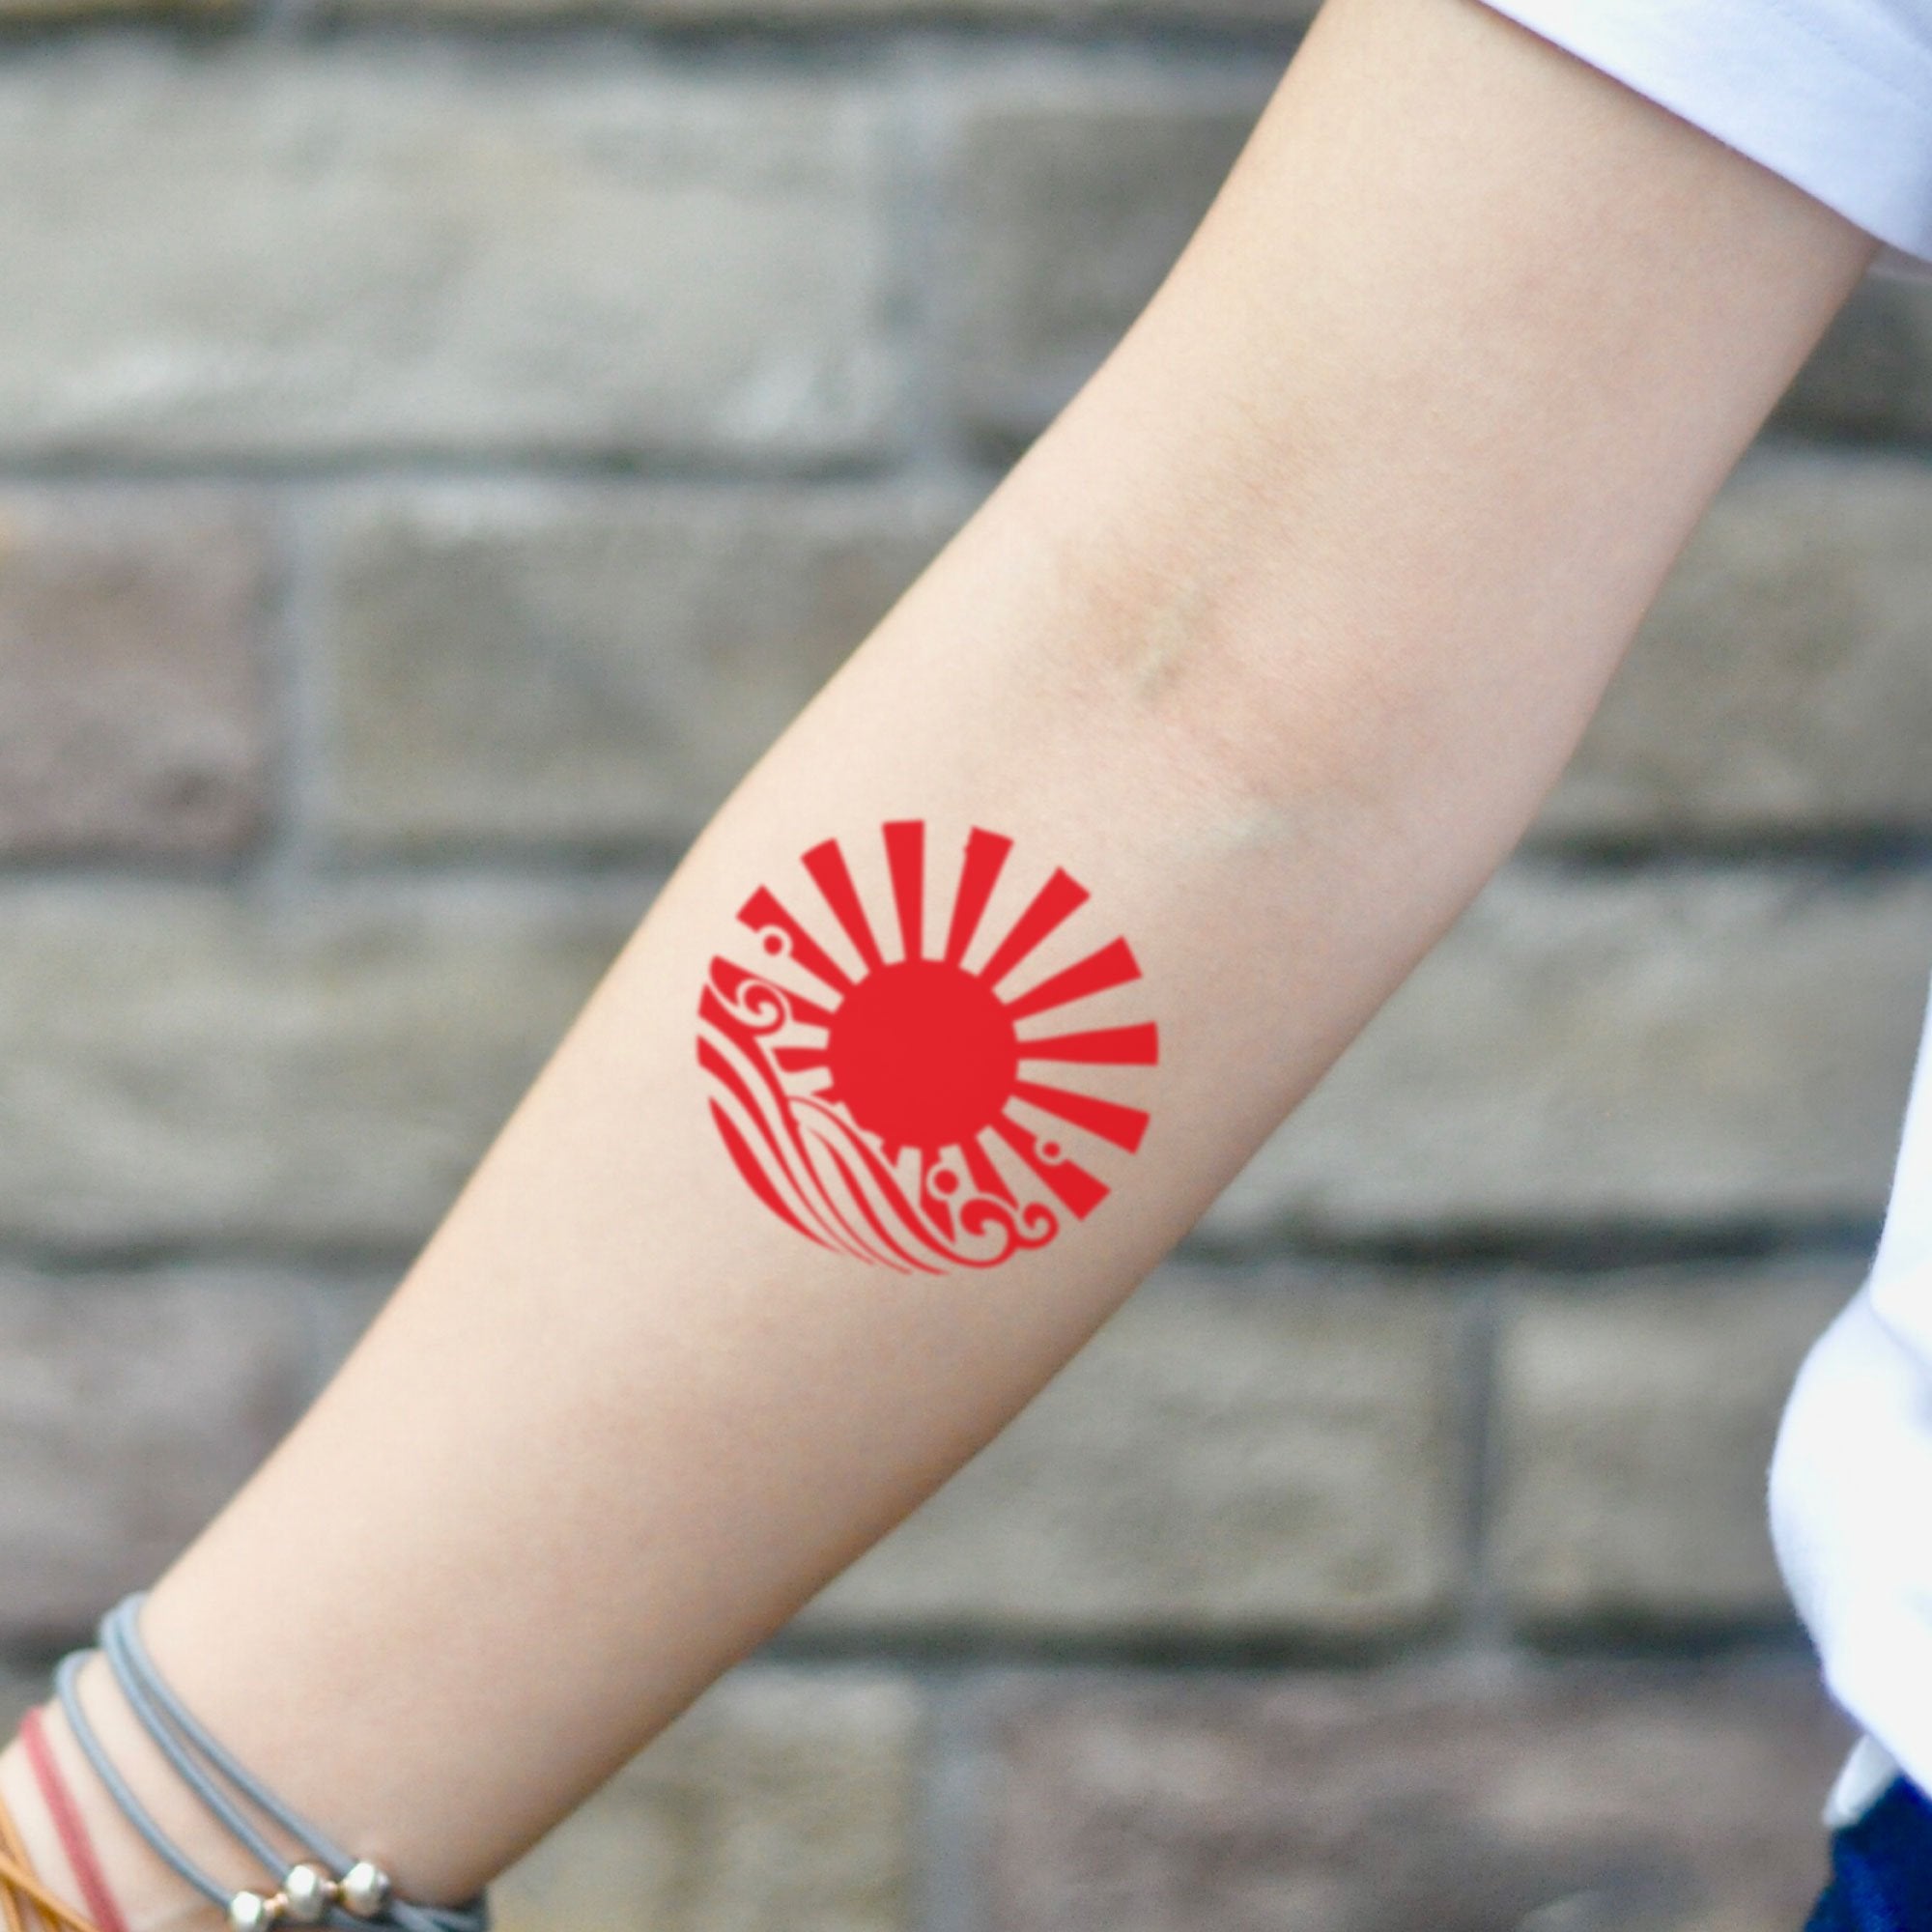 Bold Tiny Sun Tattoo Designs on Back  Tattoo Ink Master